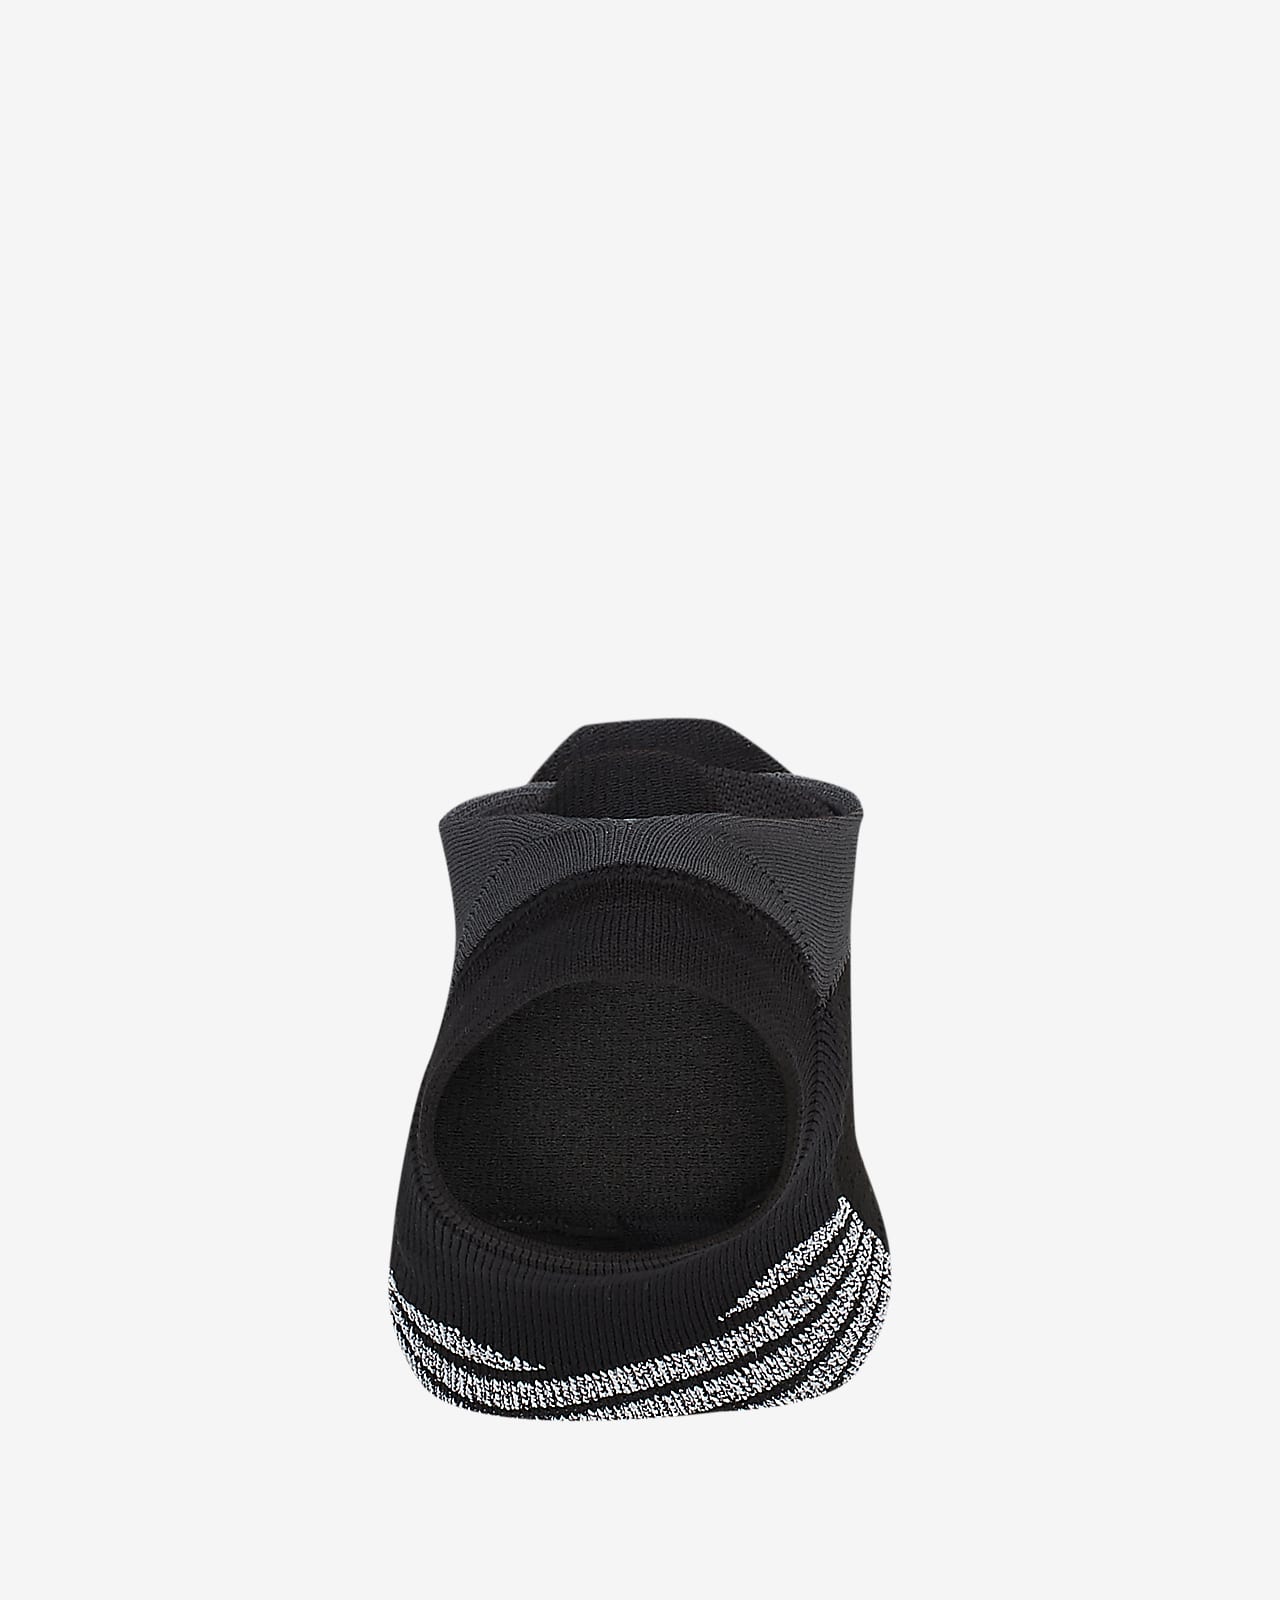 Grip Socks. Nike UK